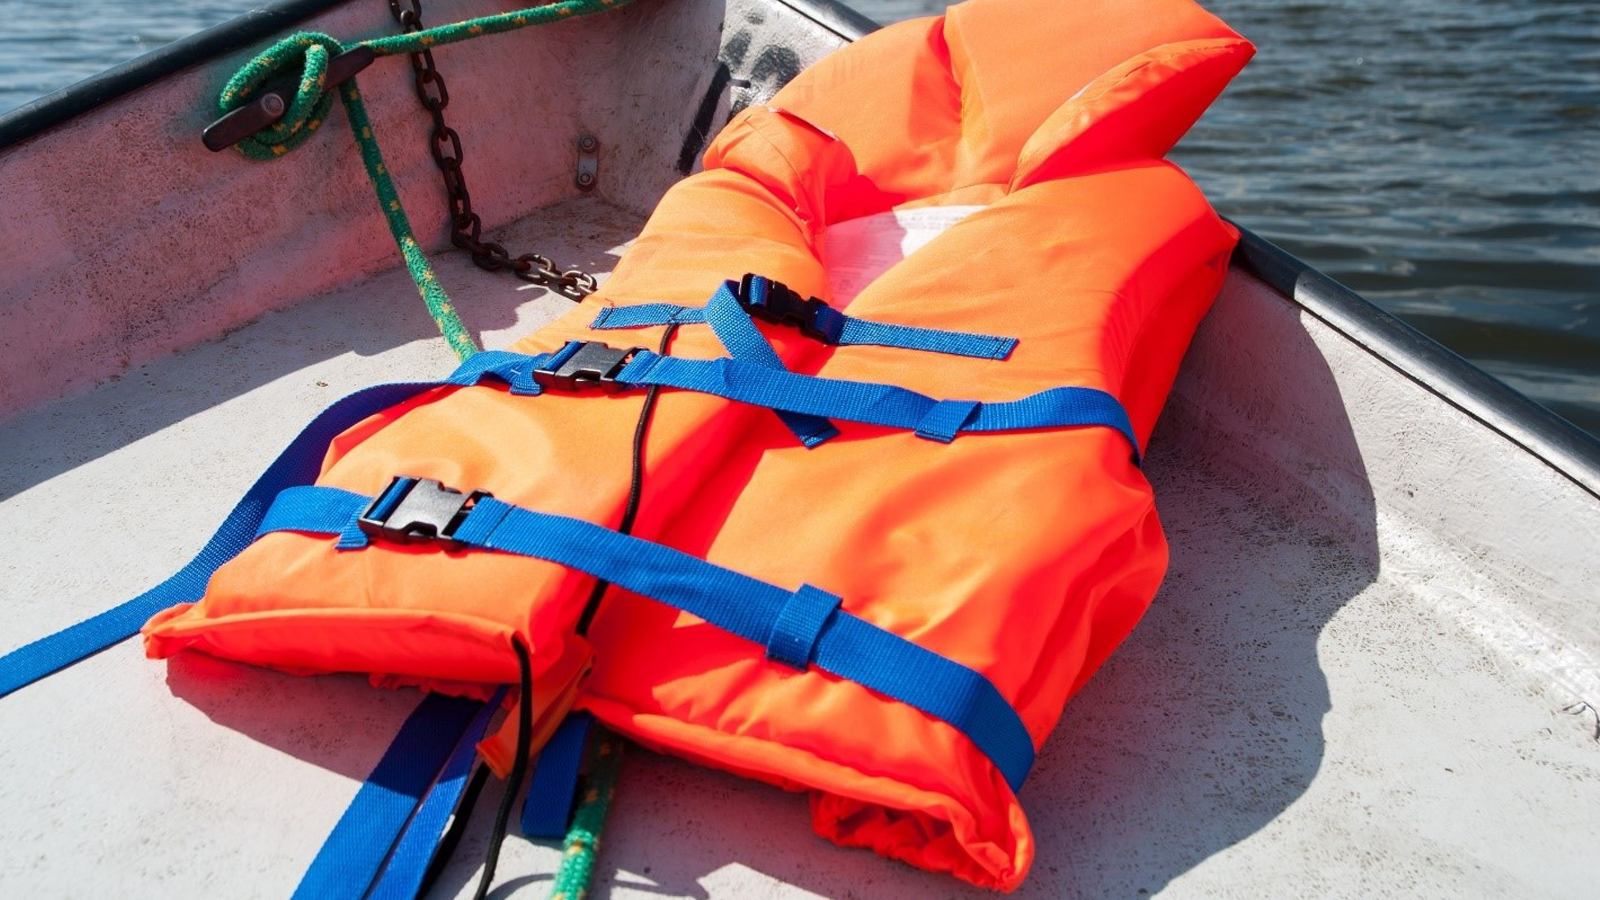 Тело утонувшего мужчины нашли на реке Суде